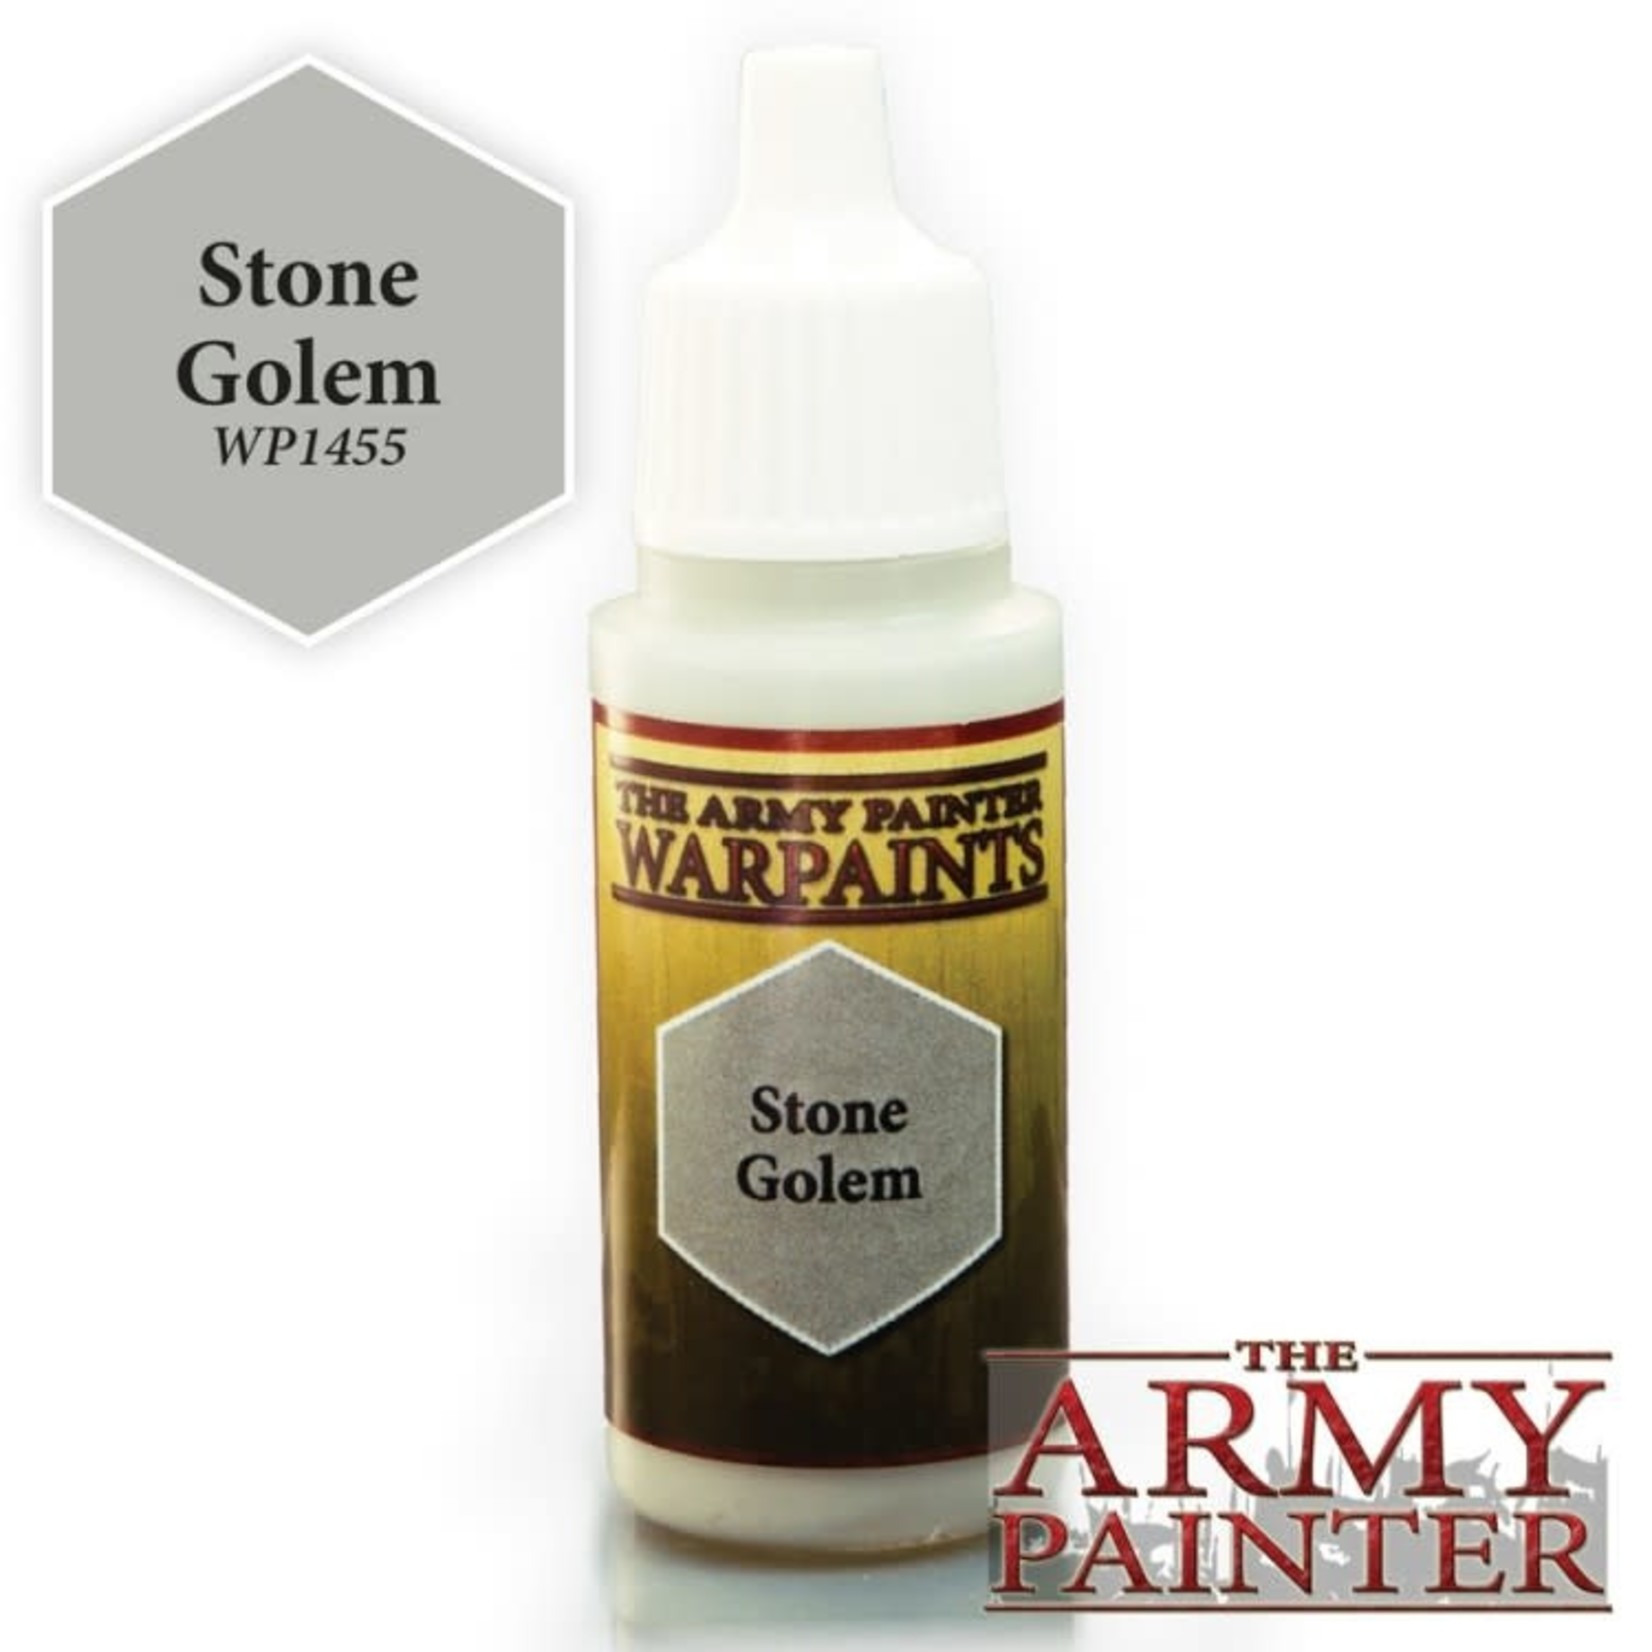 Army Painter Army Painter Warpaints Stone Golem